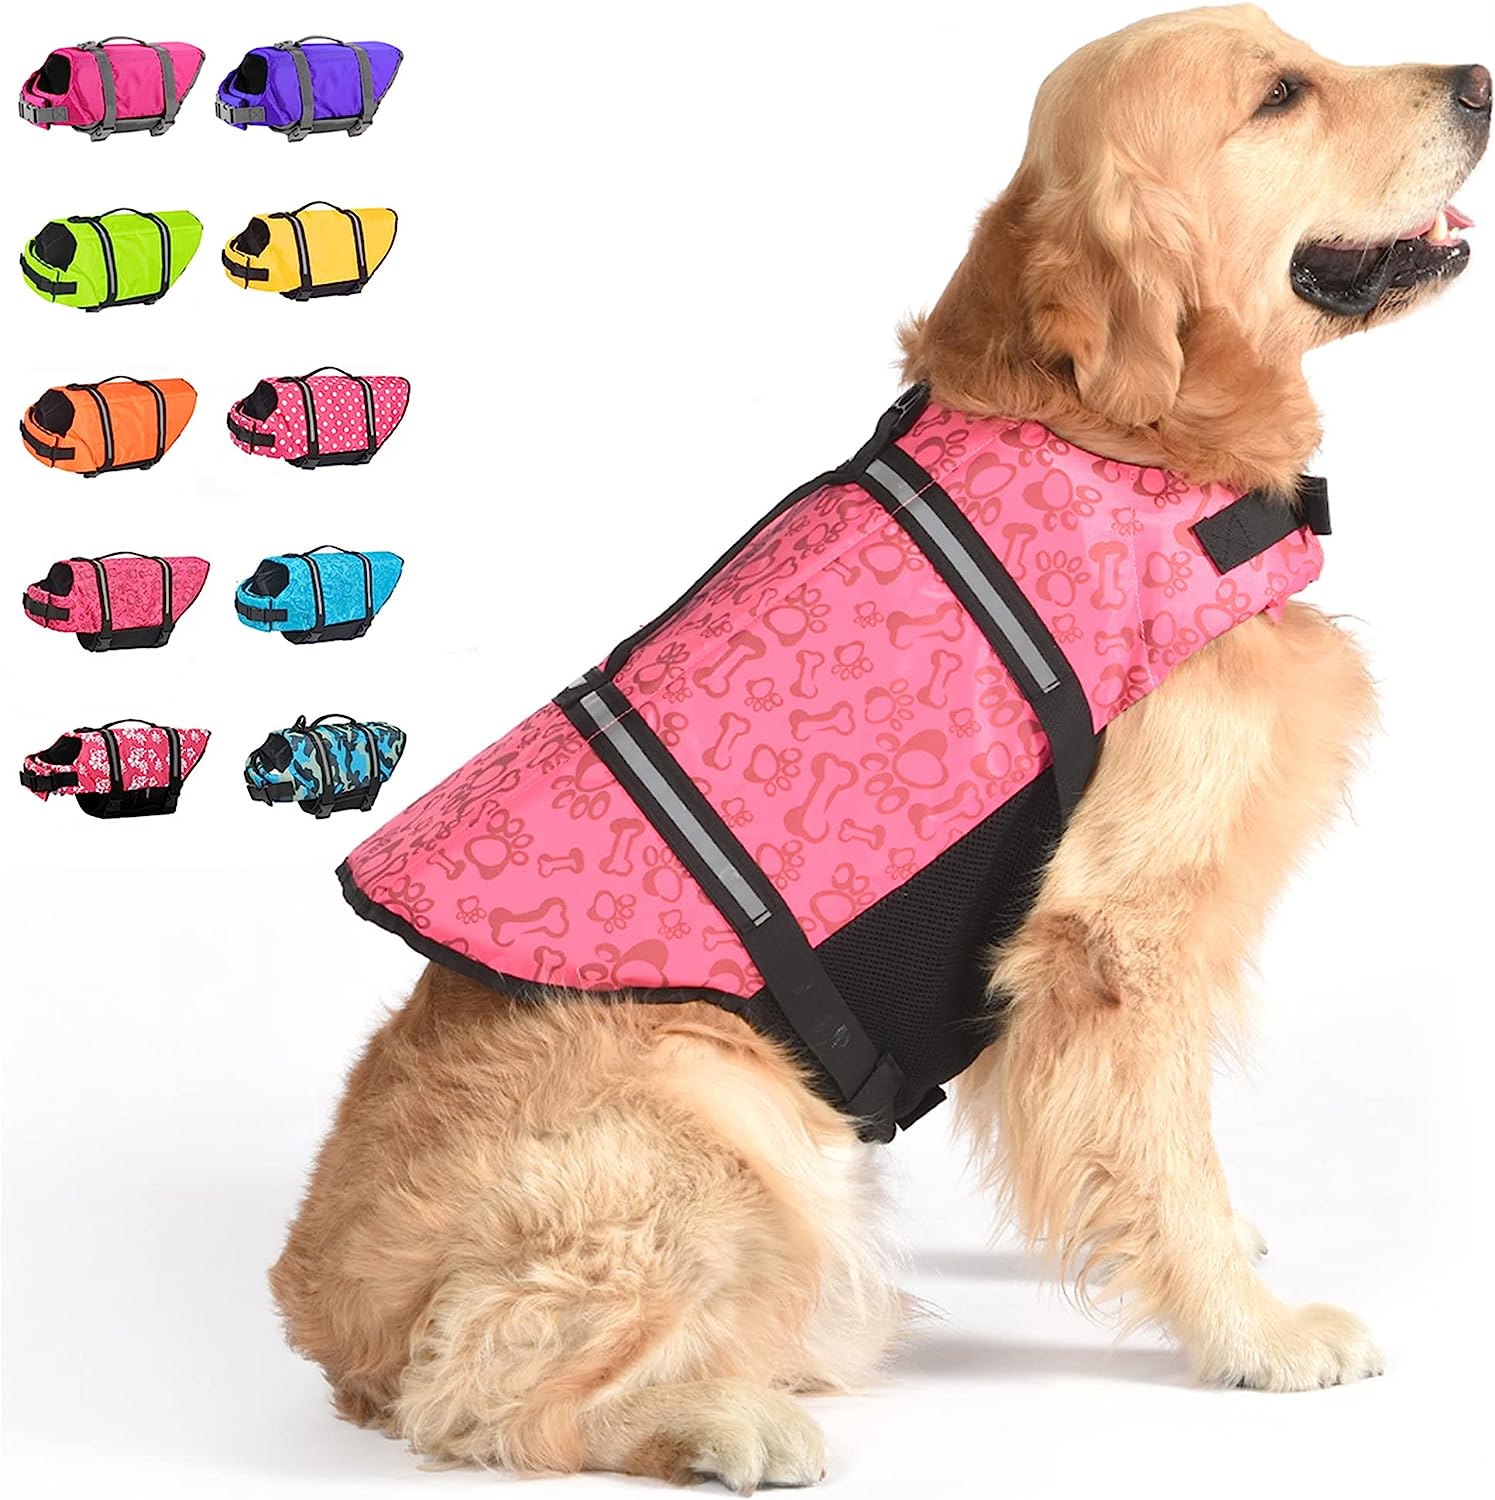 Safety Swimsuit Preserver with Reflective Stripes Dog Life Jacket